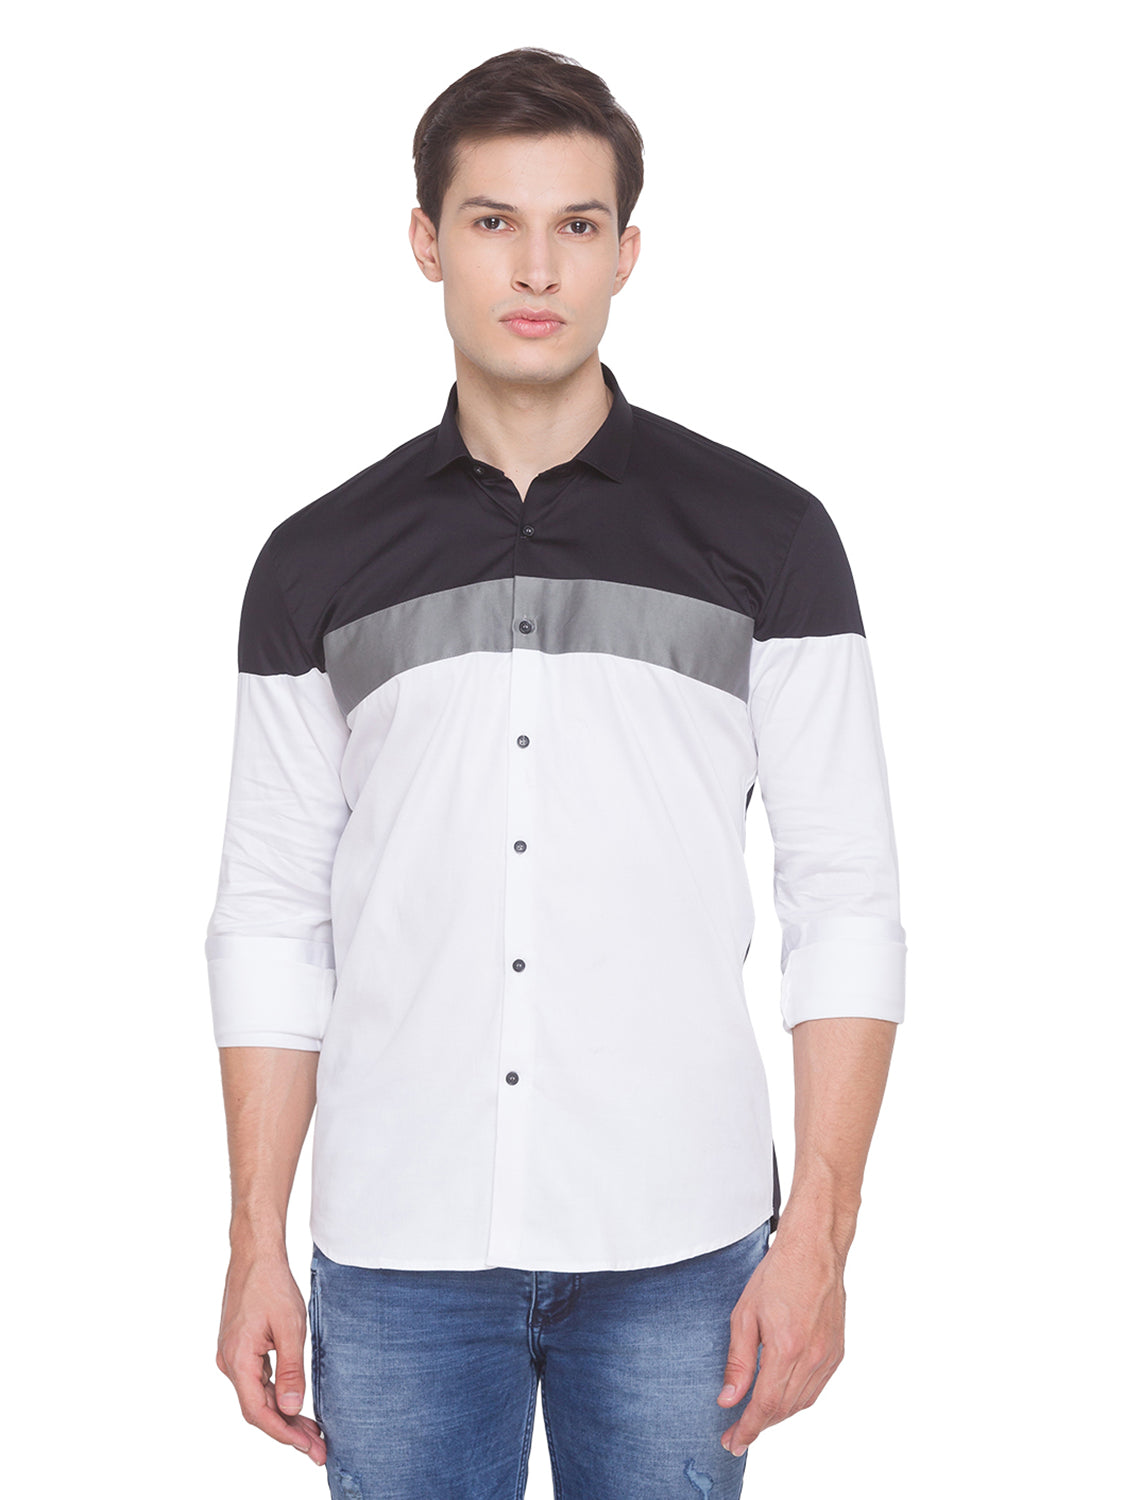 Black & White Color Block Shirt